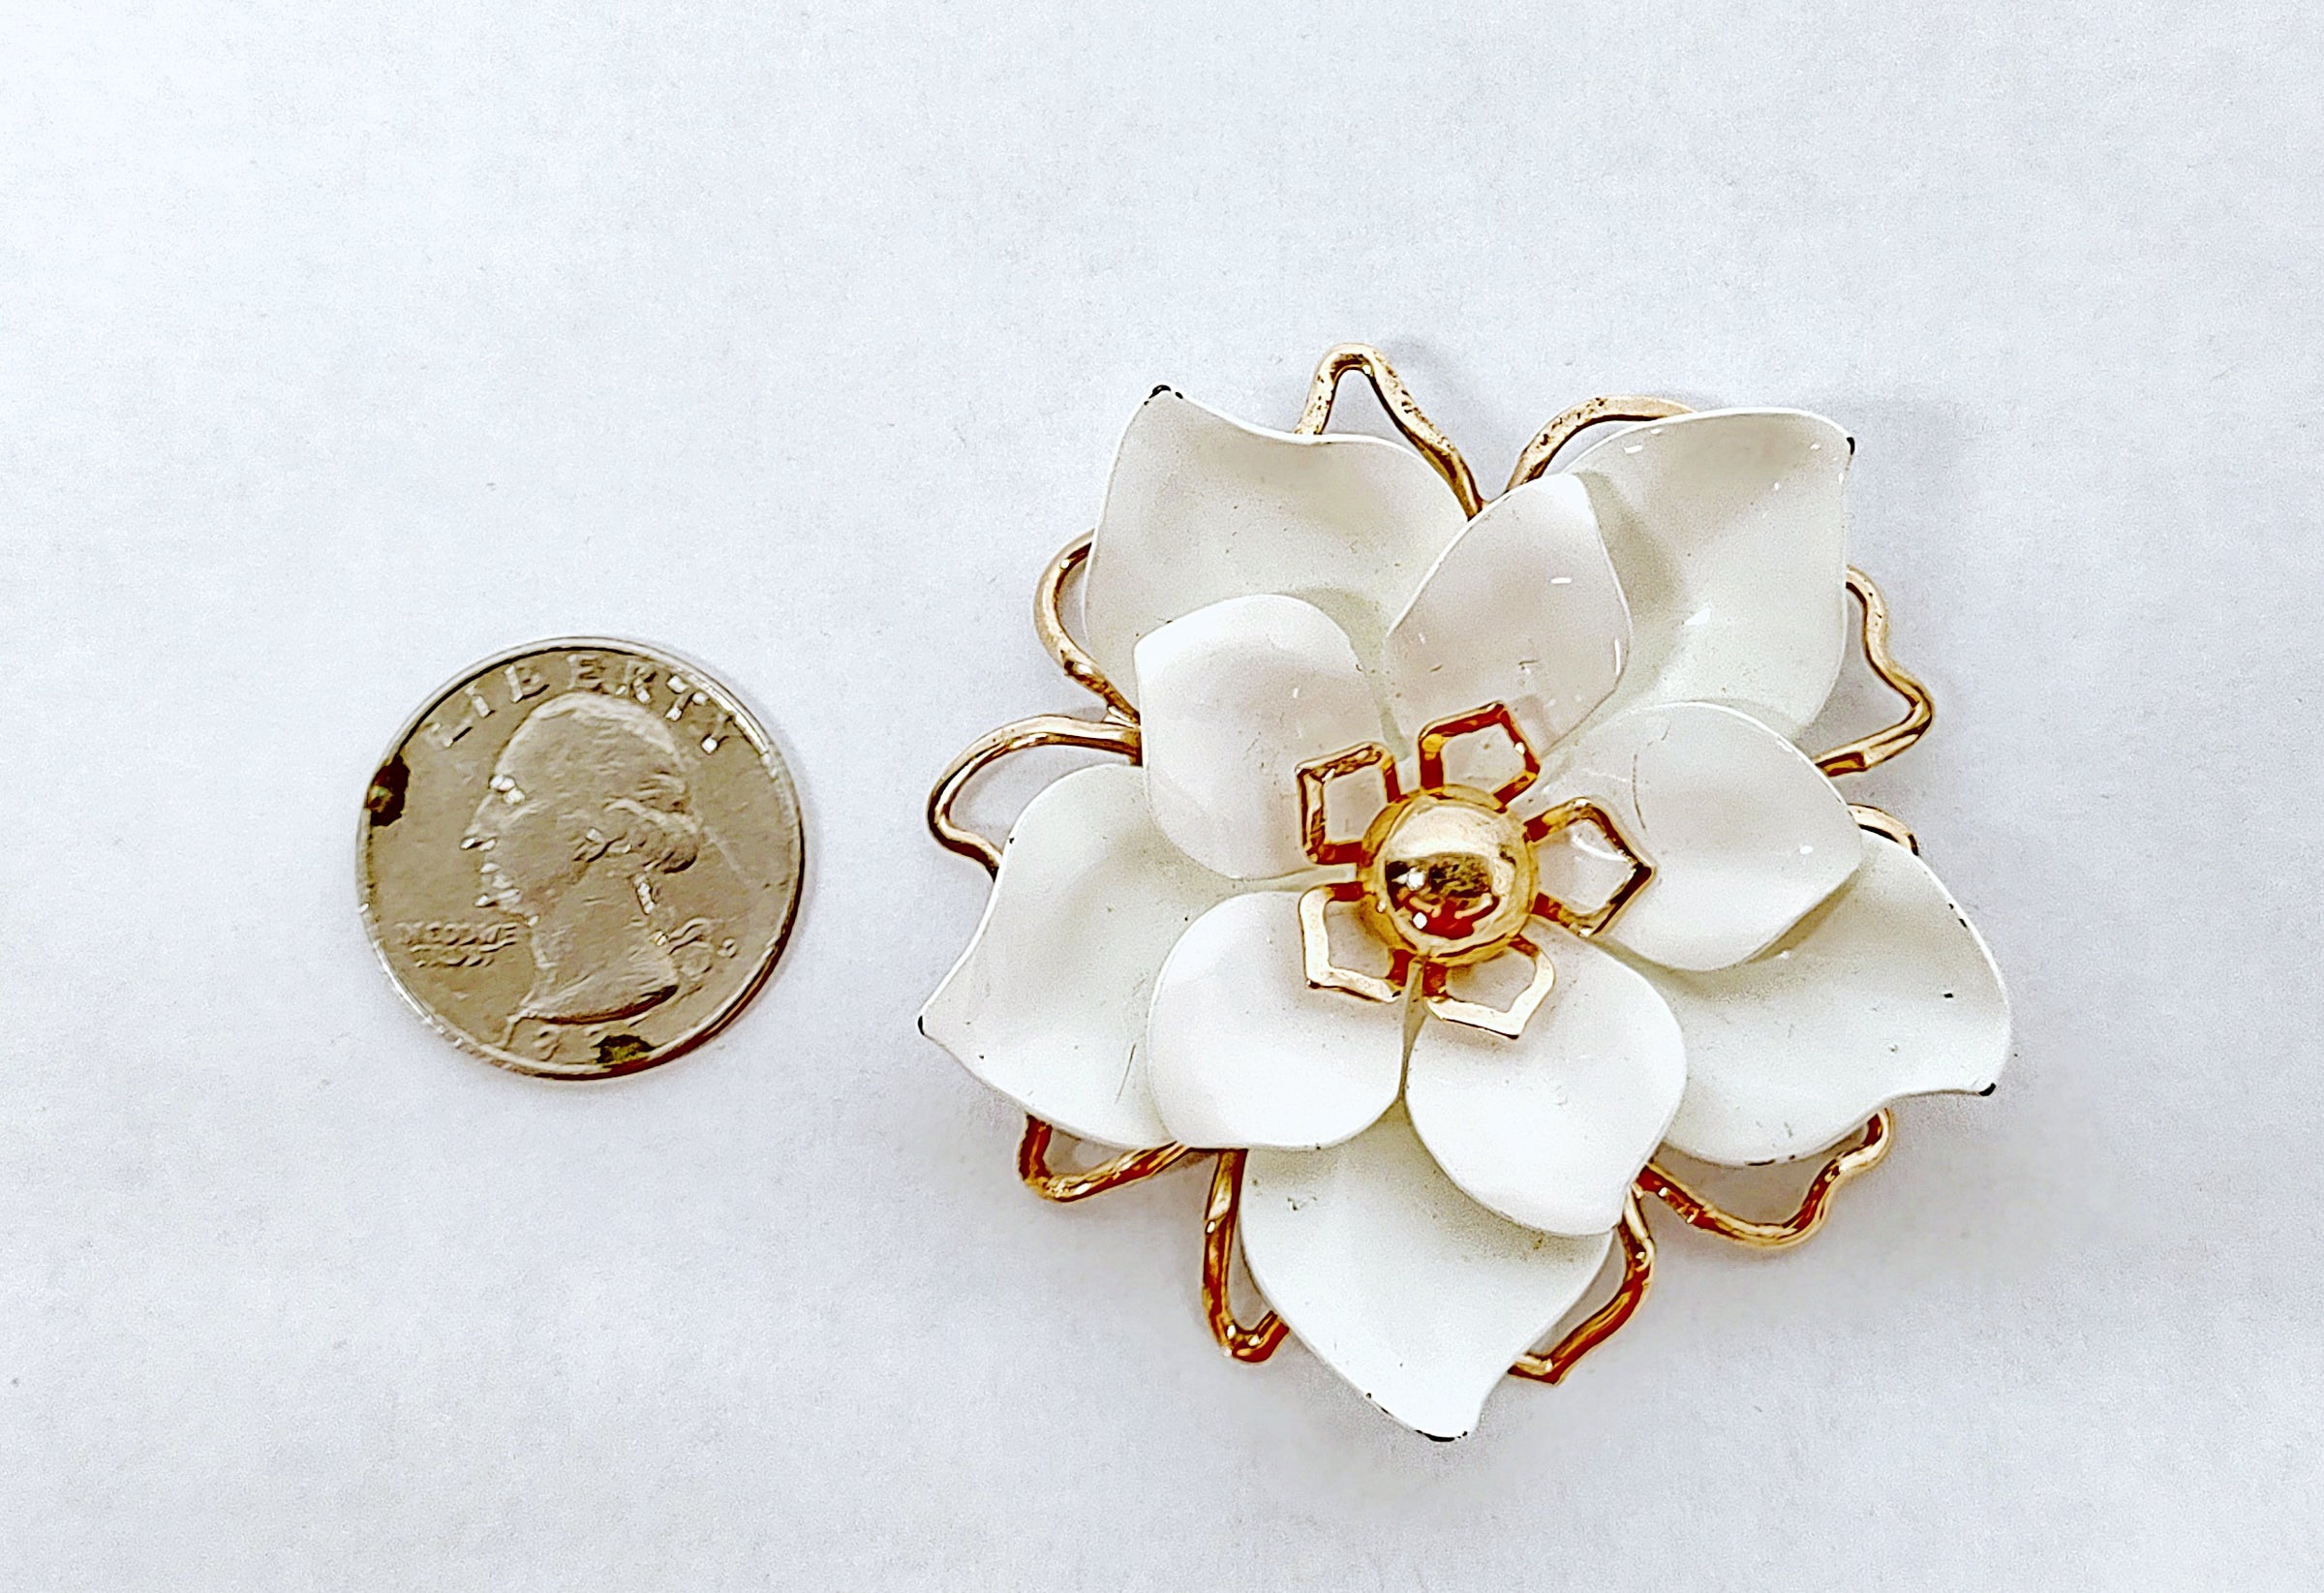 Vintage EMMONS Gold Tone and White Enamel Flower Brooch 